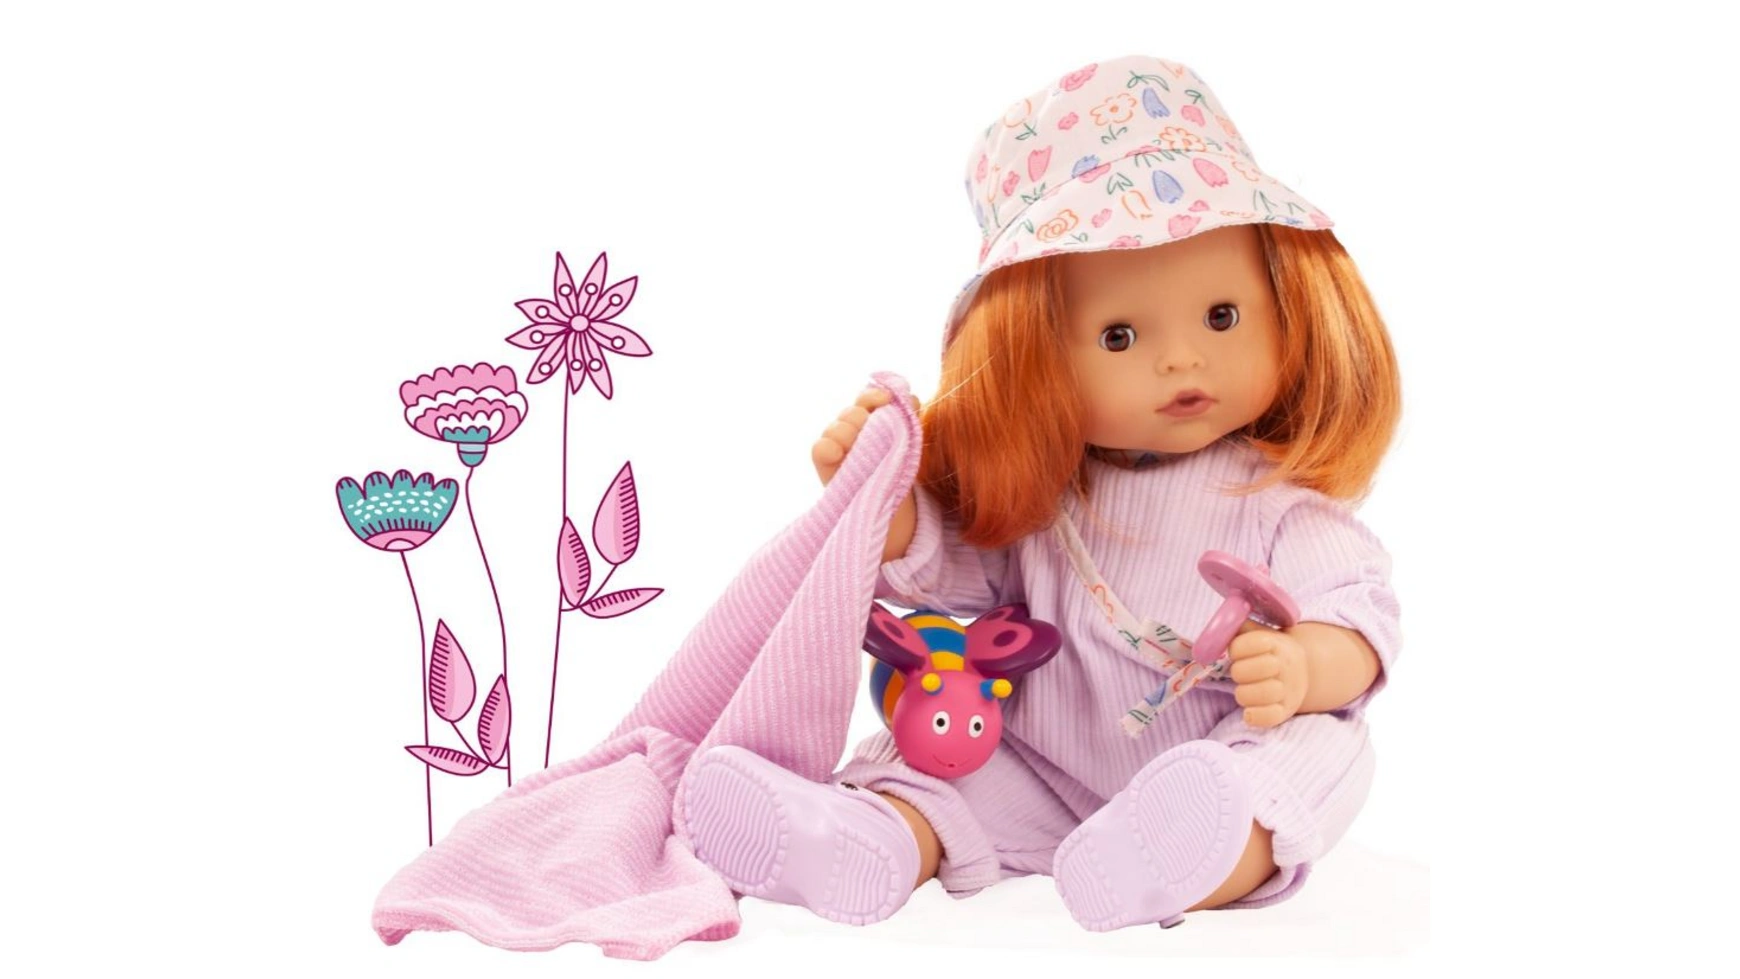 Maxy aquini bliblablume, кукла для ванны, 42 см Götz Puppenmanufaktur цена и фото